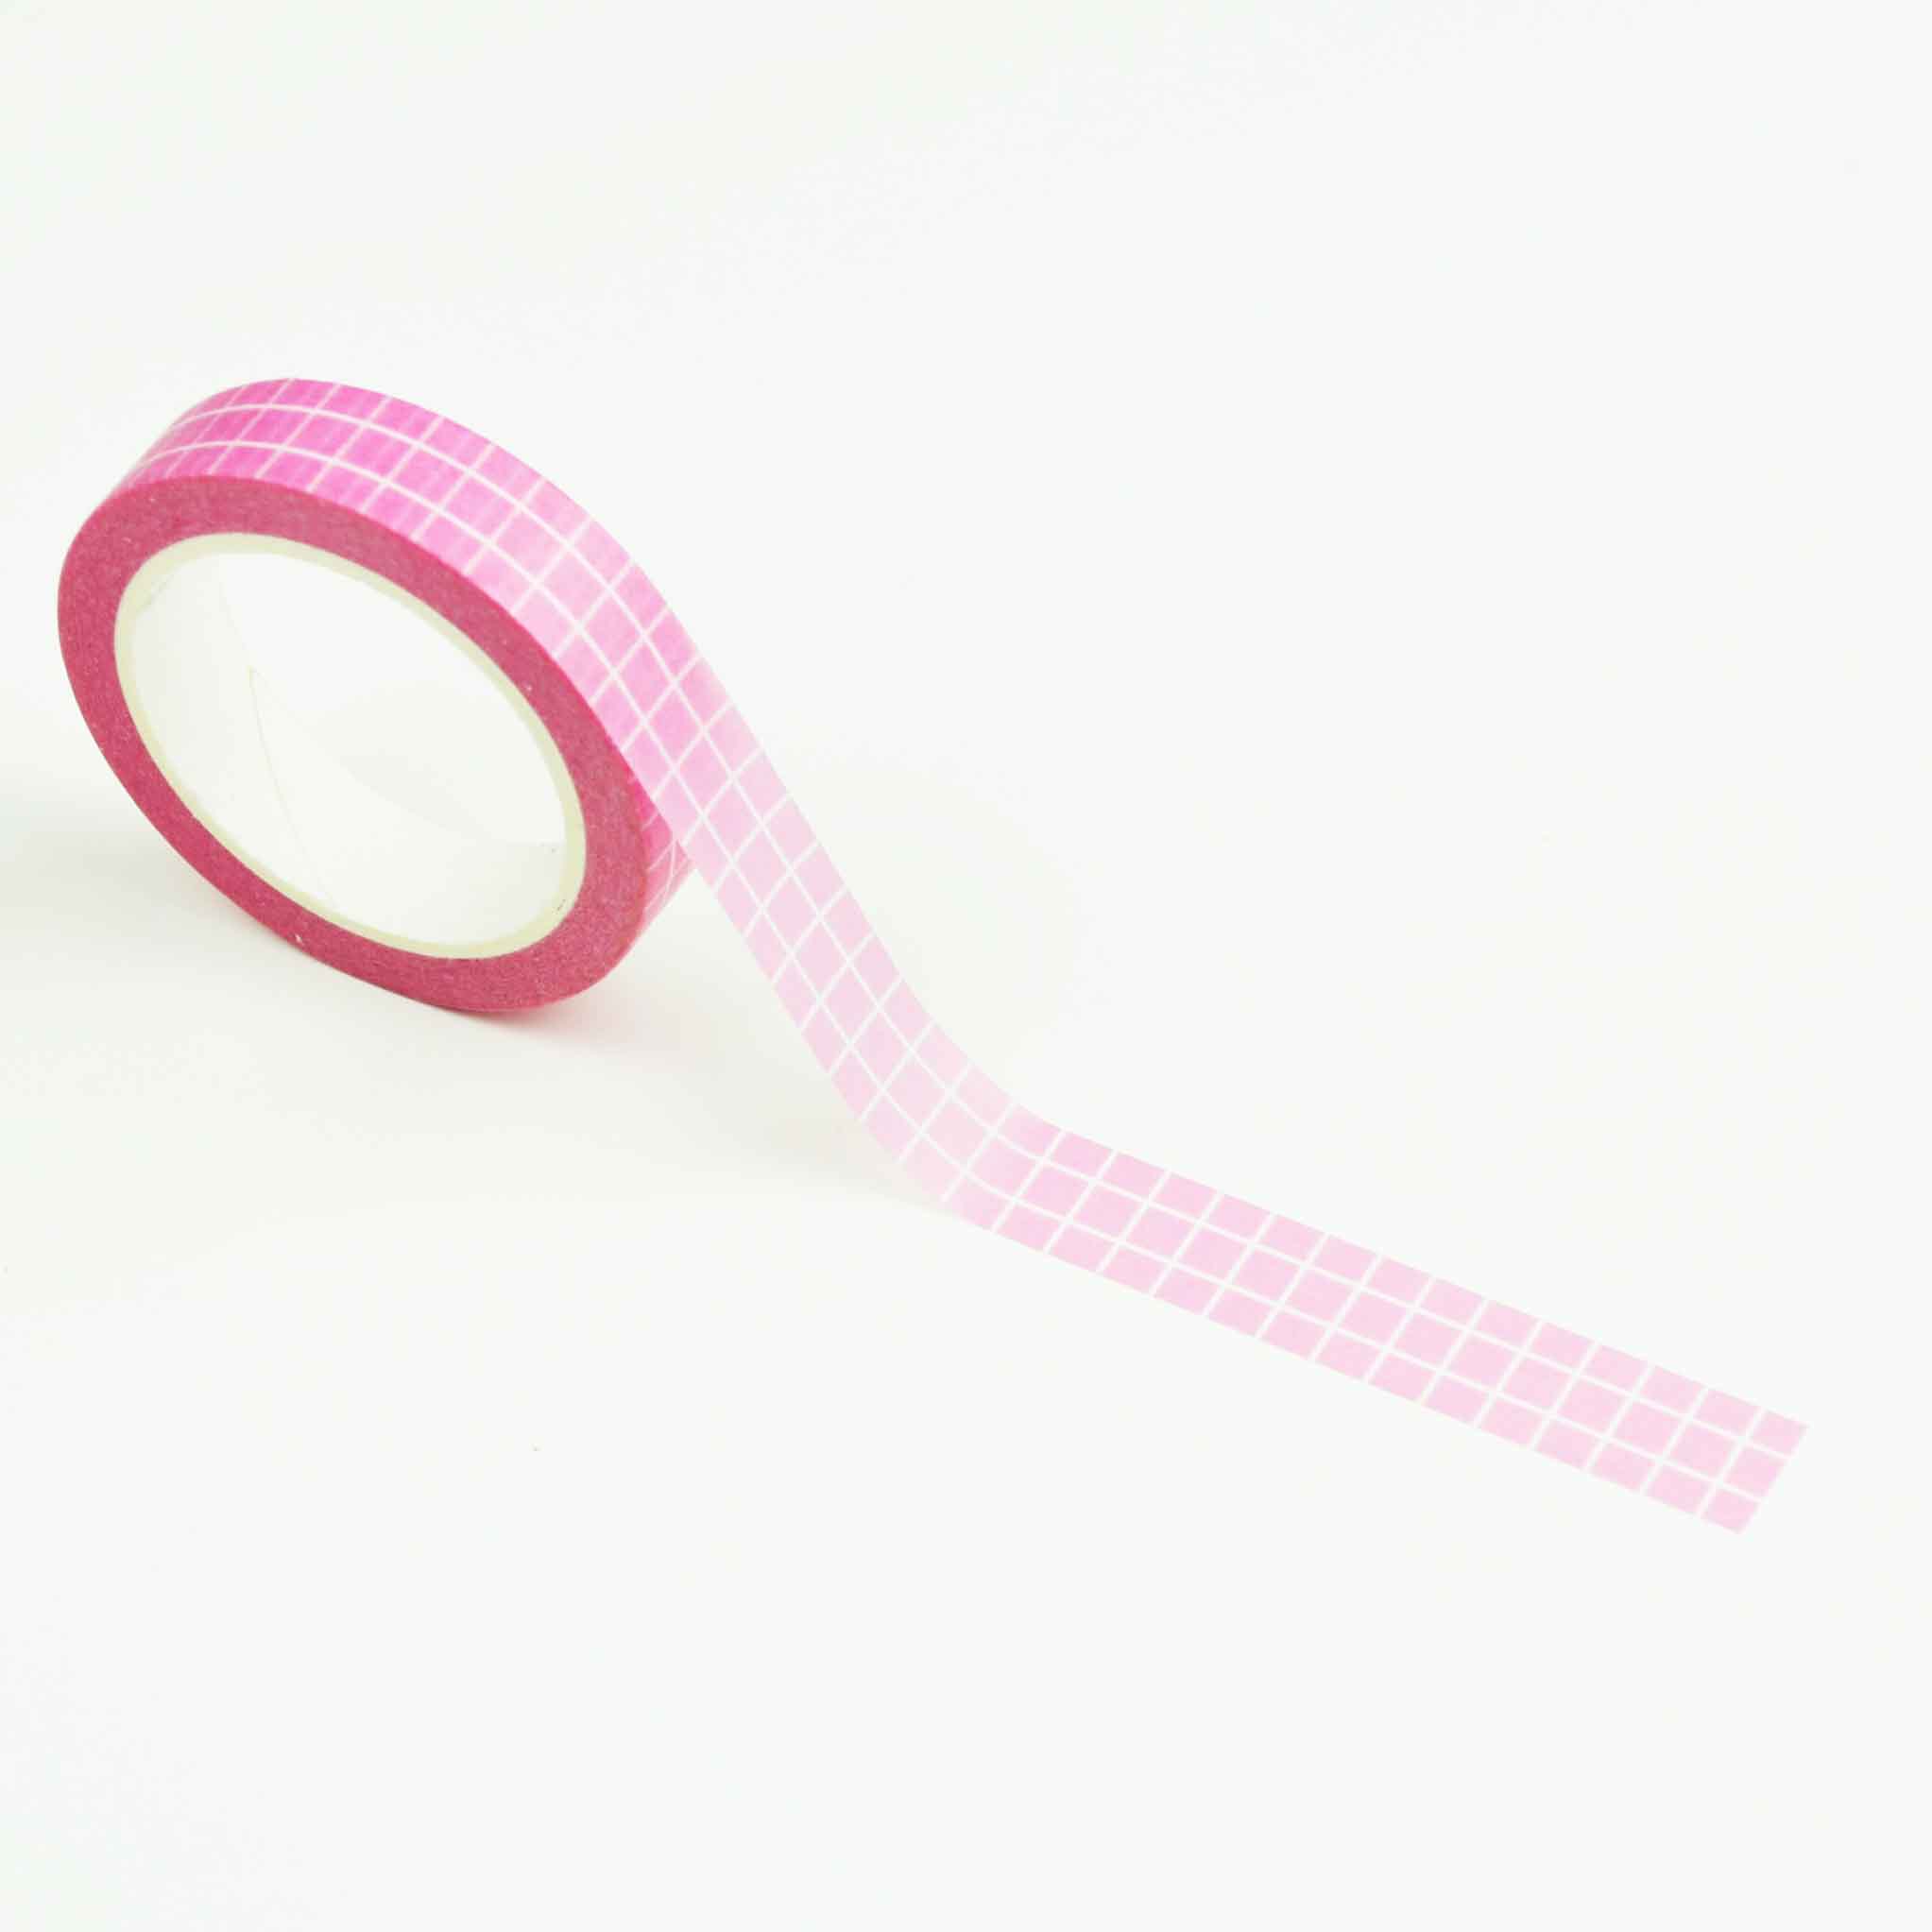 Washi tape: Fuchsia Pink Grid